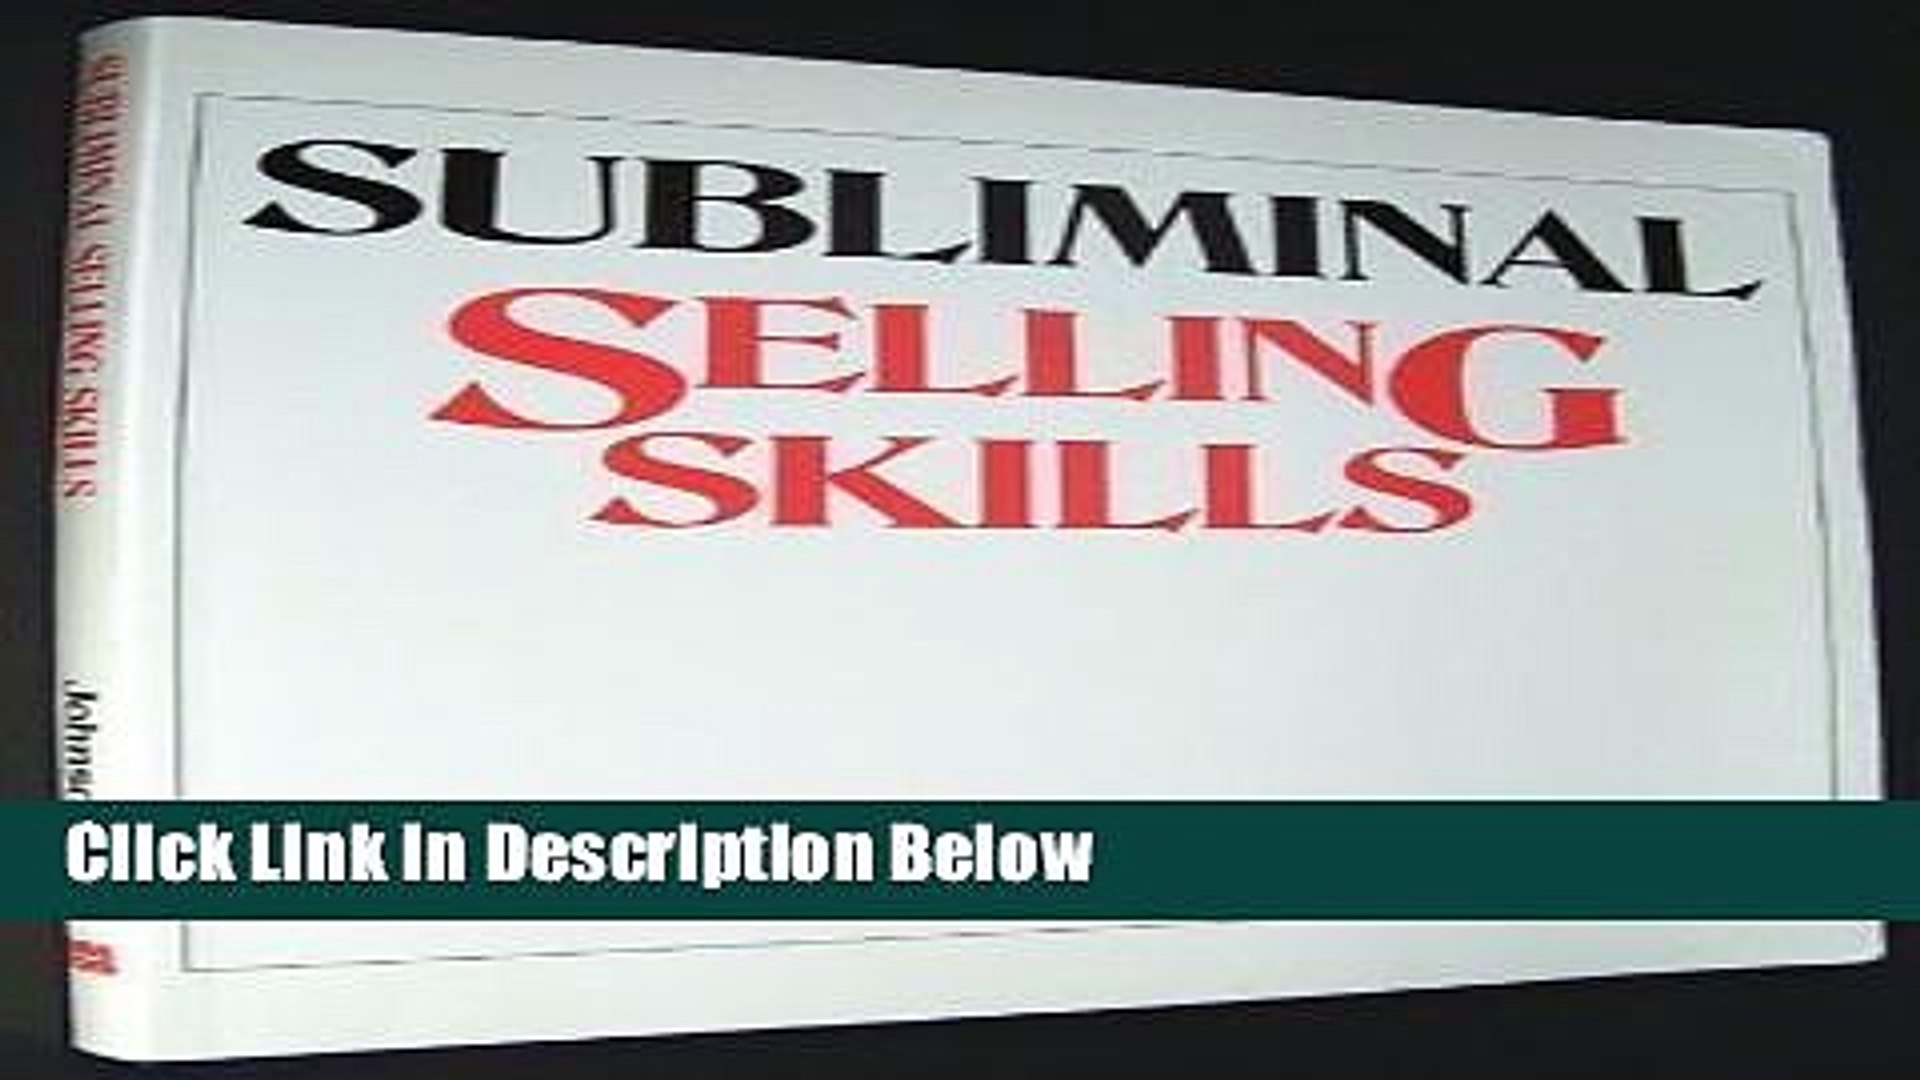 [best] Subliminal Selling Skills Online Books - Sign , HD Wallpaper & Backgrounds